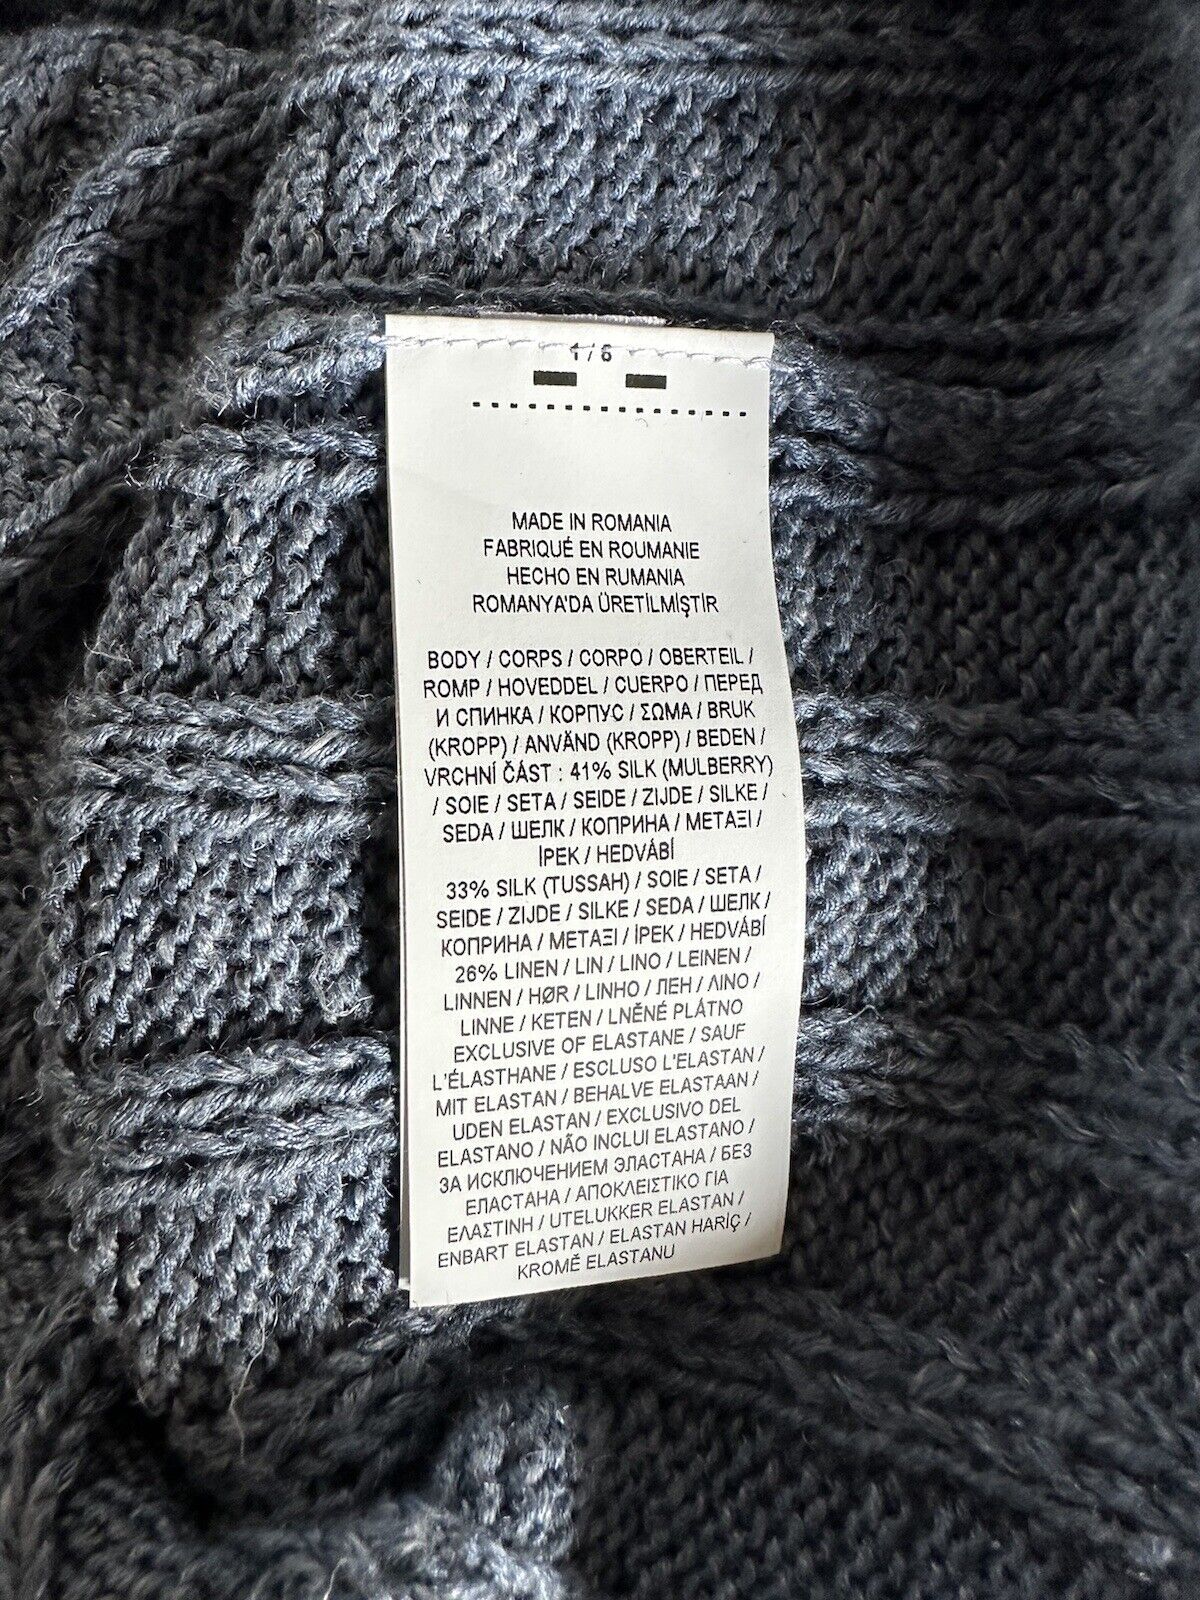 NWT $1095 Polo Ralph Lauren Purple Label Silk/Linen Blue Knit Sweater M